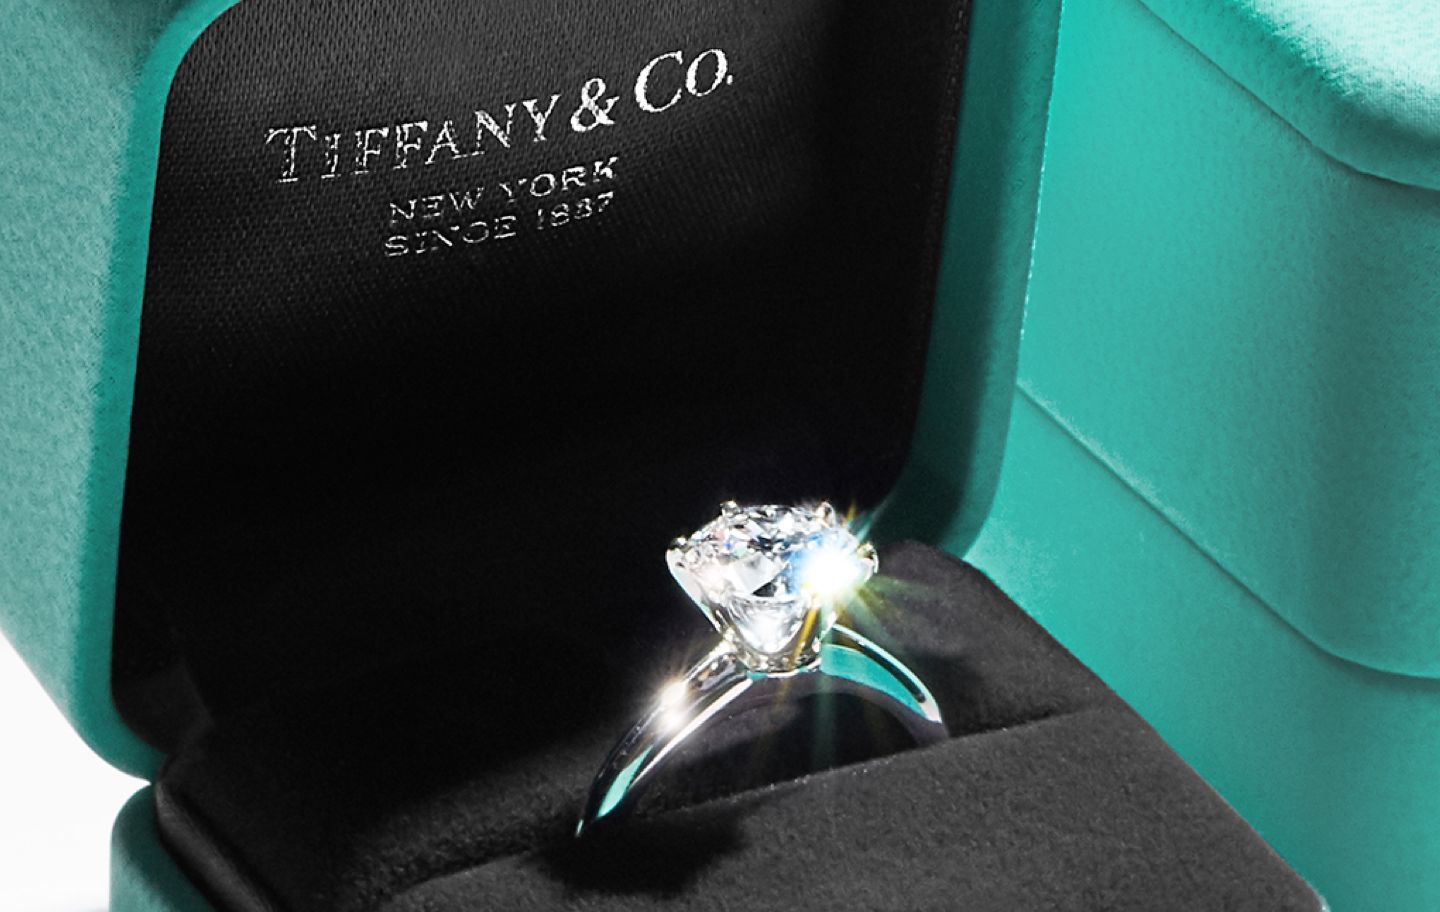 Diamond 4C Education: The Tiffany Guide to Diamonds